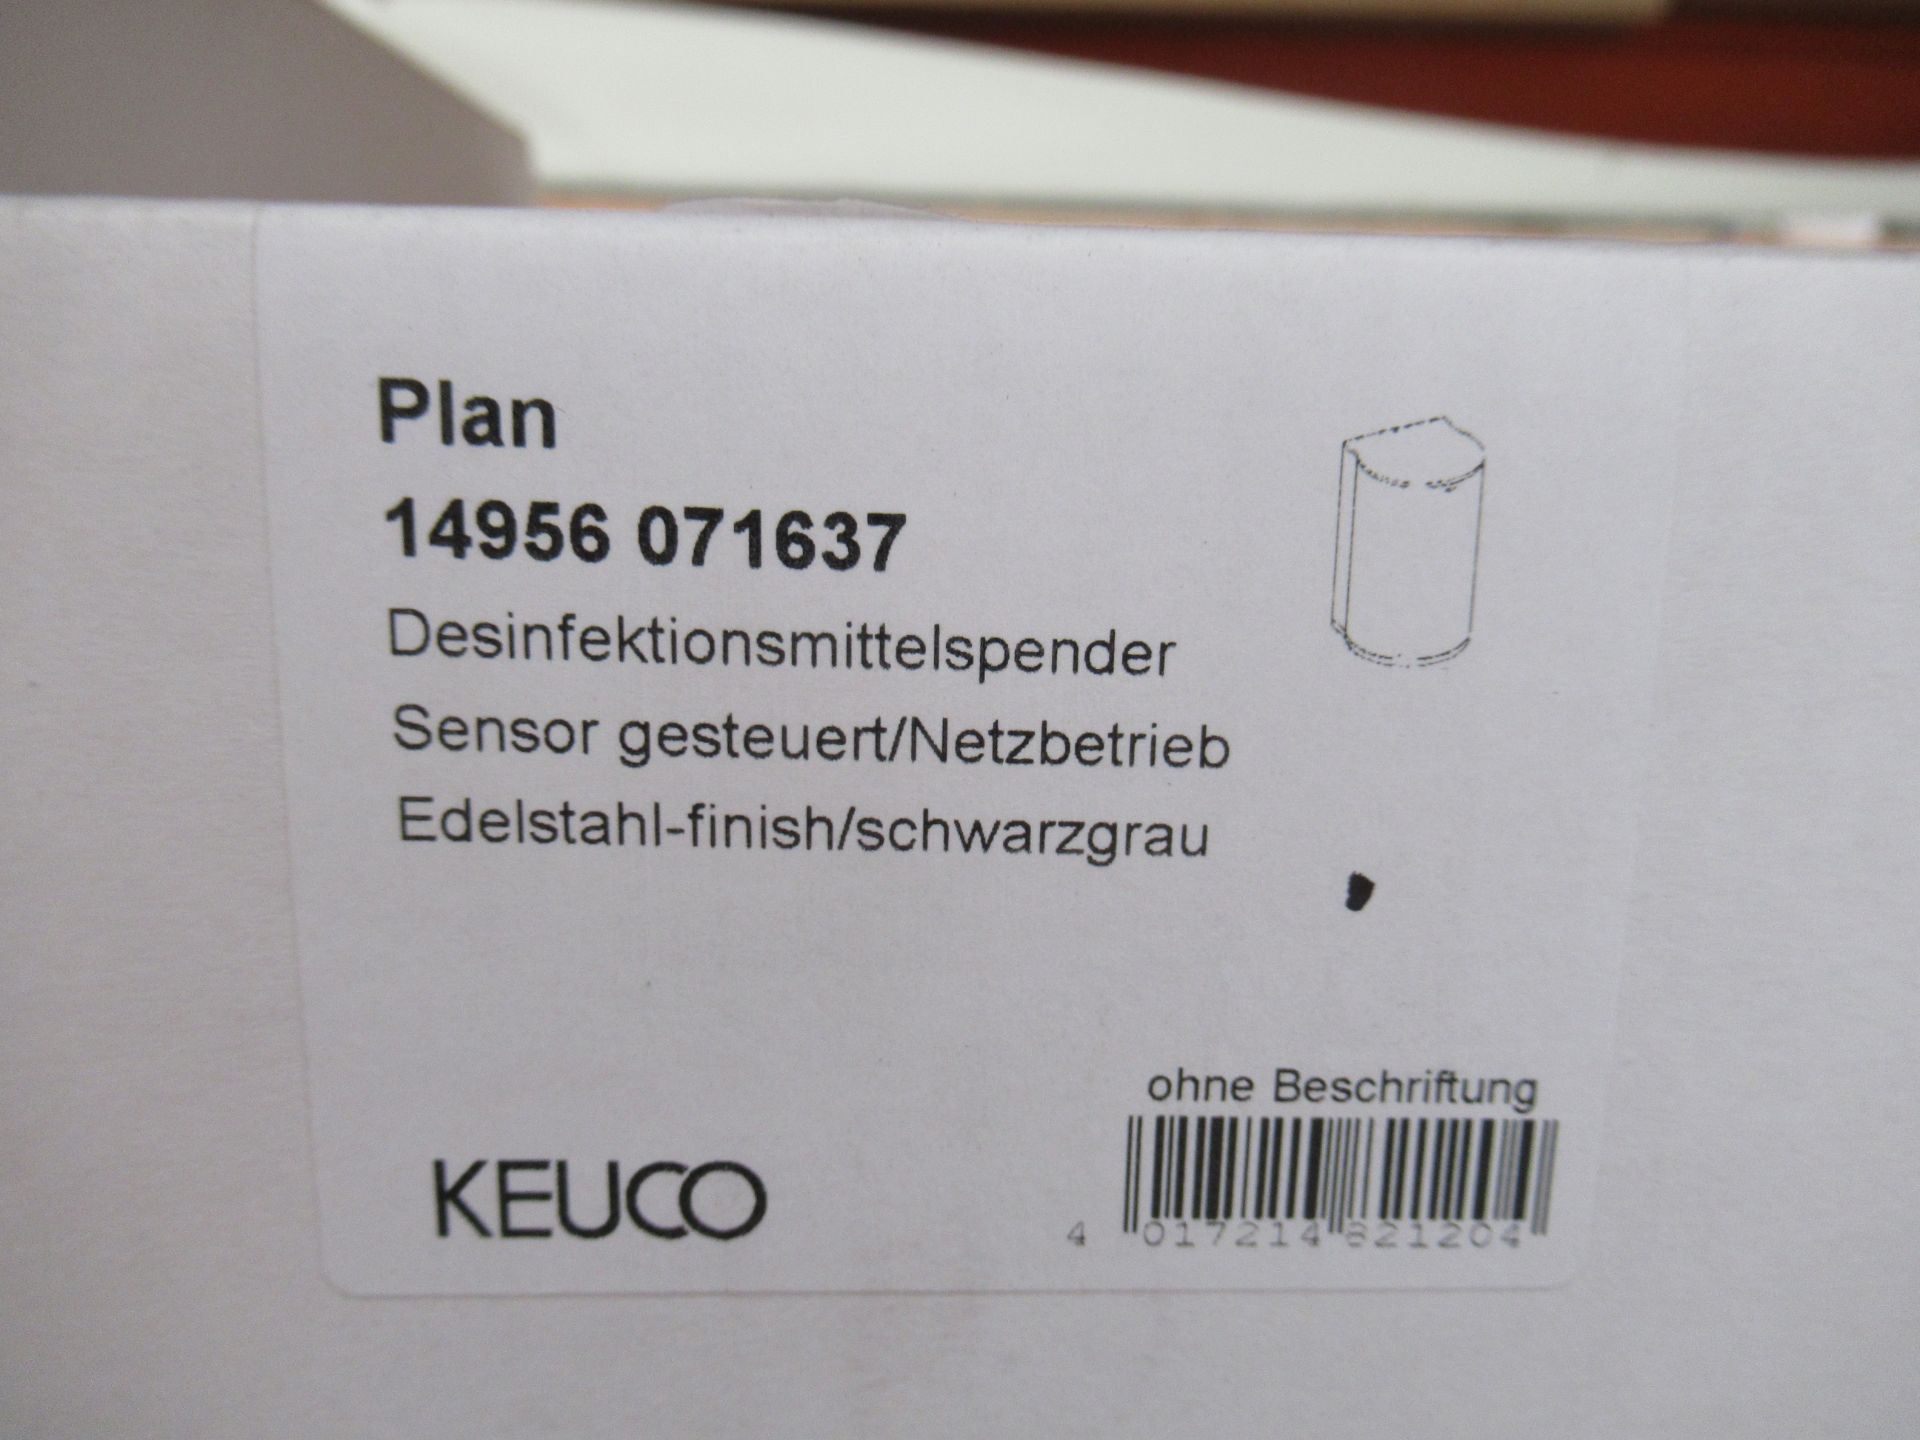 2 x Keuco Plan Disinfectant Dispensers, P/N 14956-071637 - Image 2 of 2